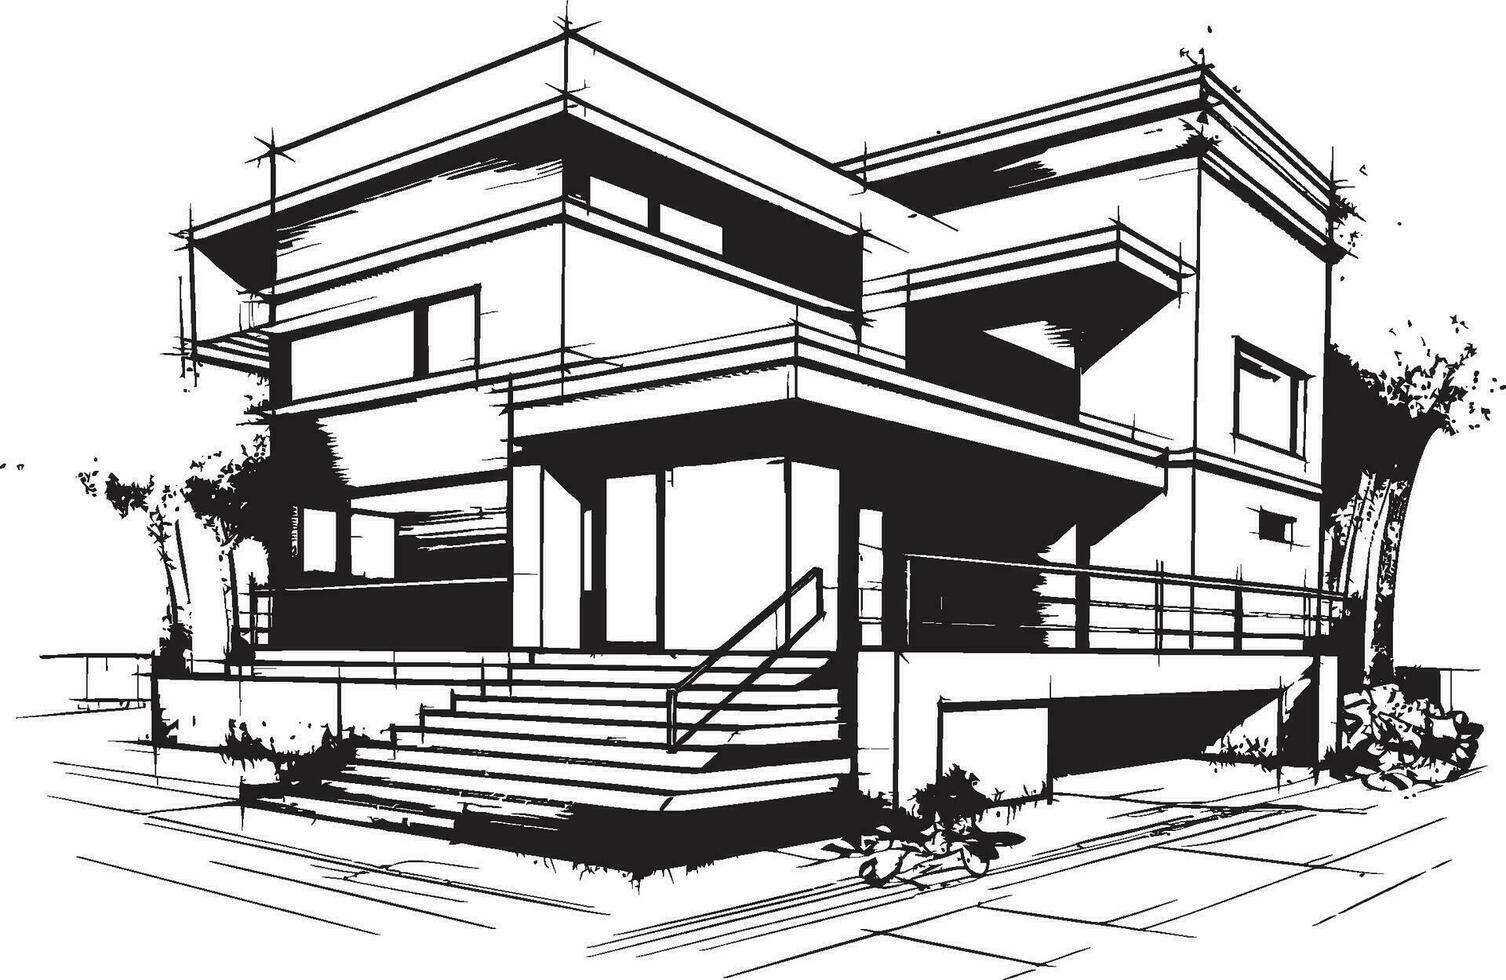 Pair House Sketch Duplex Design Vector Icon Concept Twin Domicile Impression Duplex House Sketch in Vector Logo